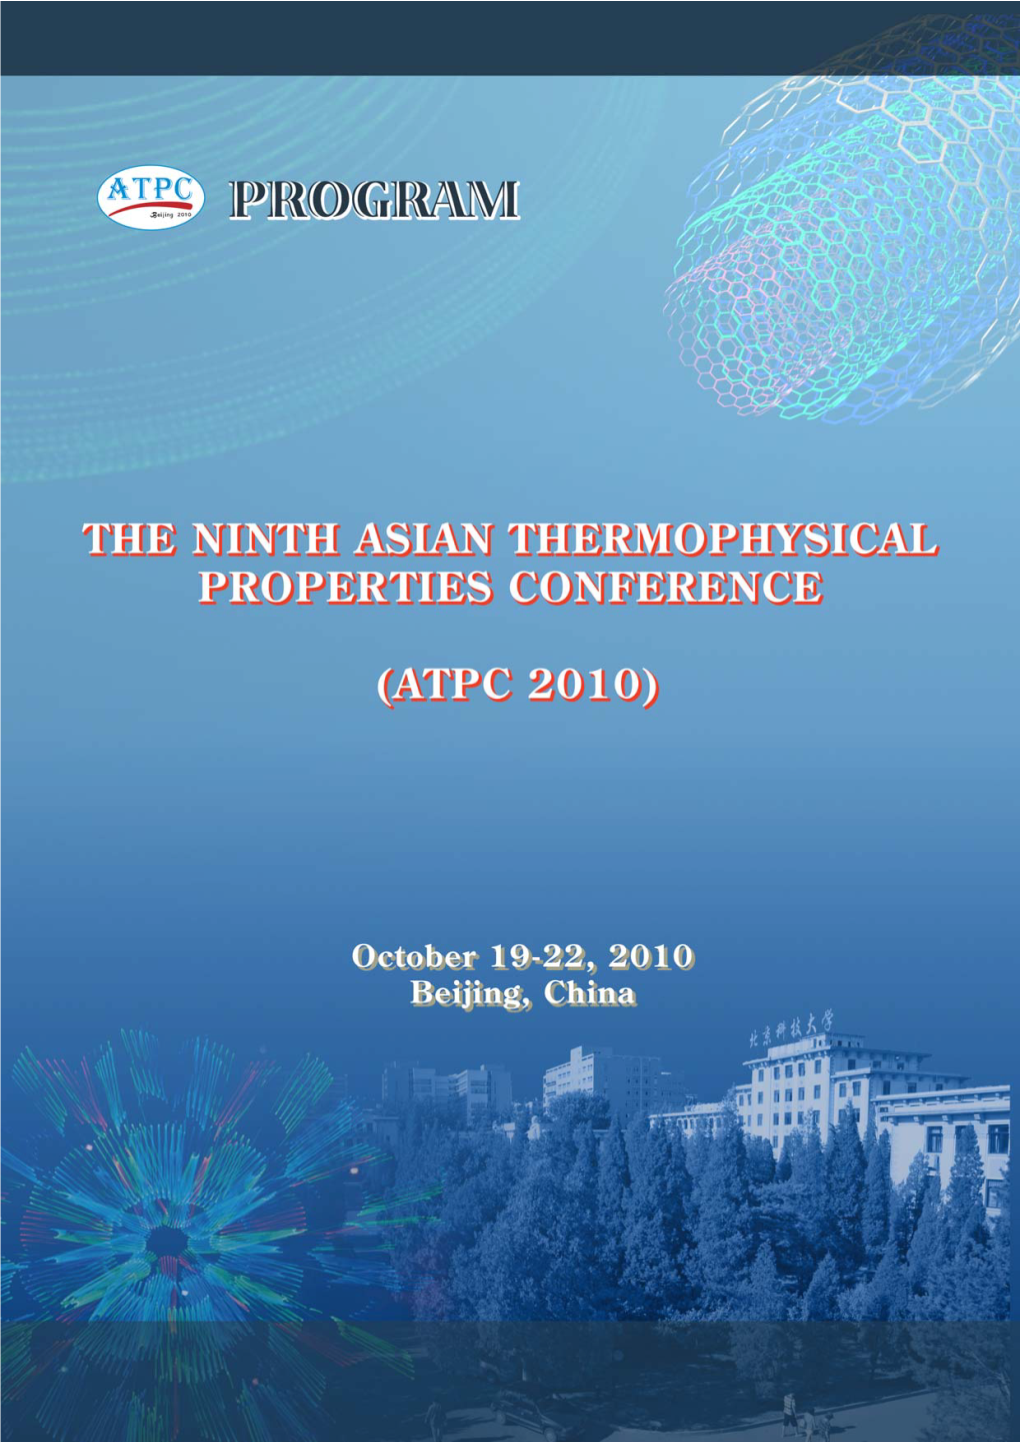 ATPC2010 Program